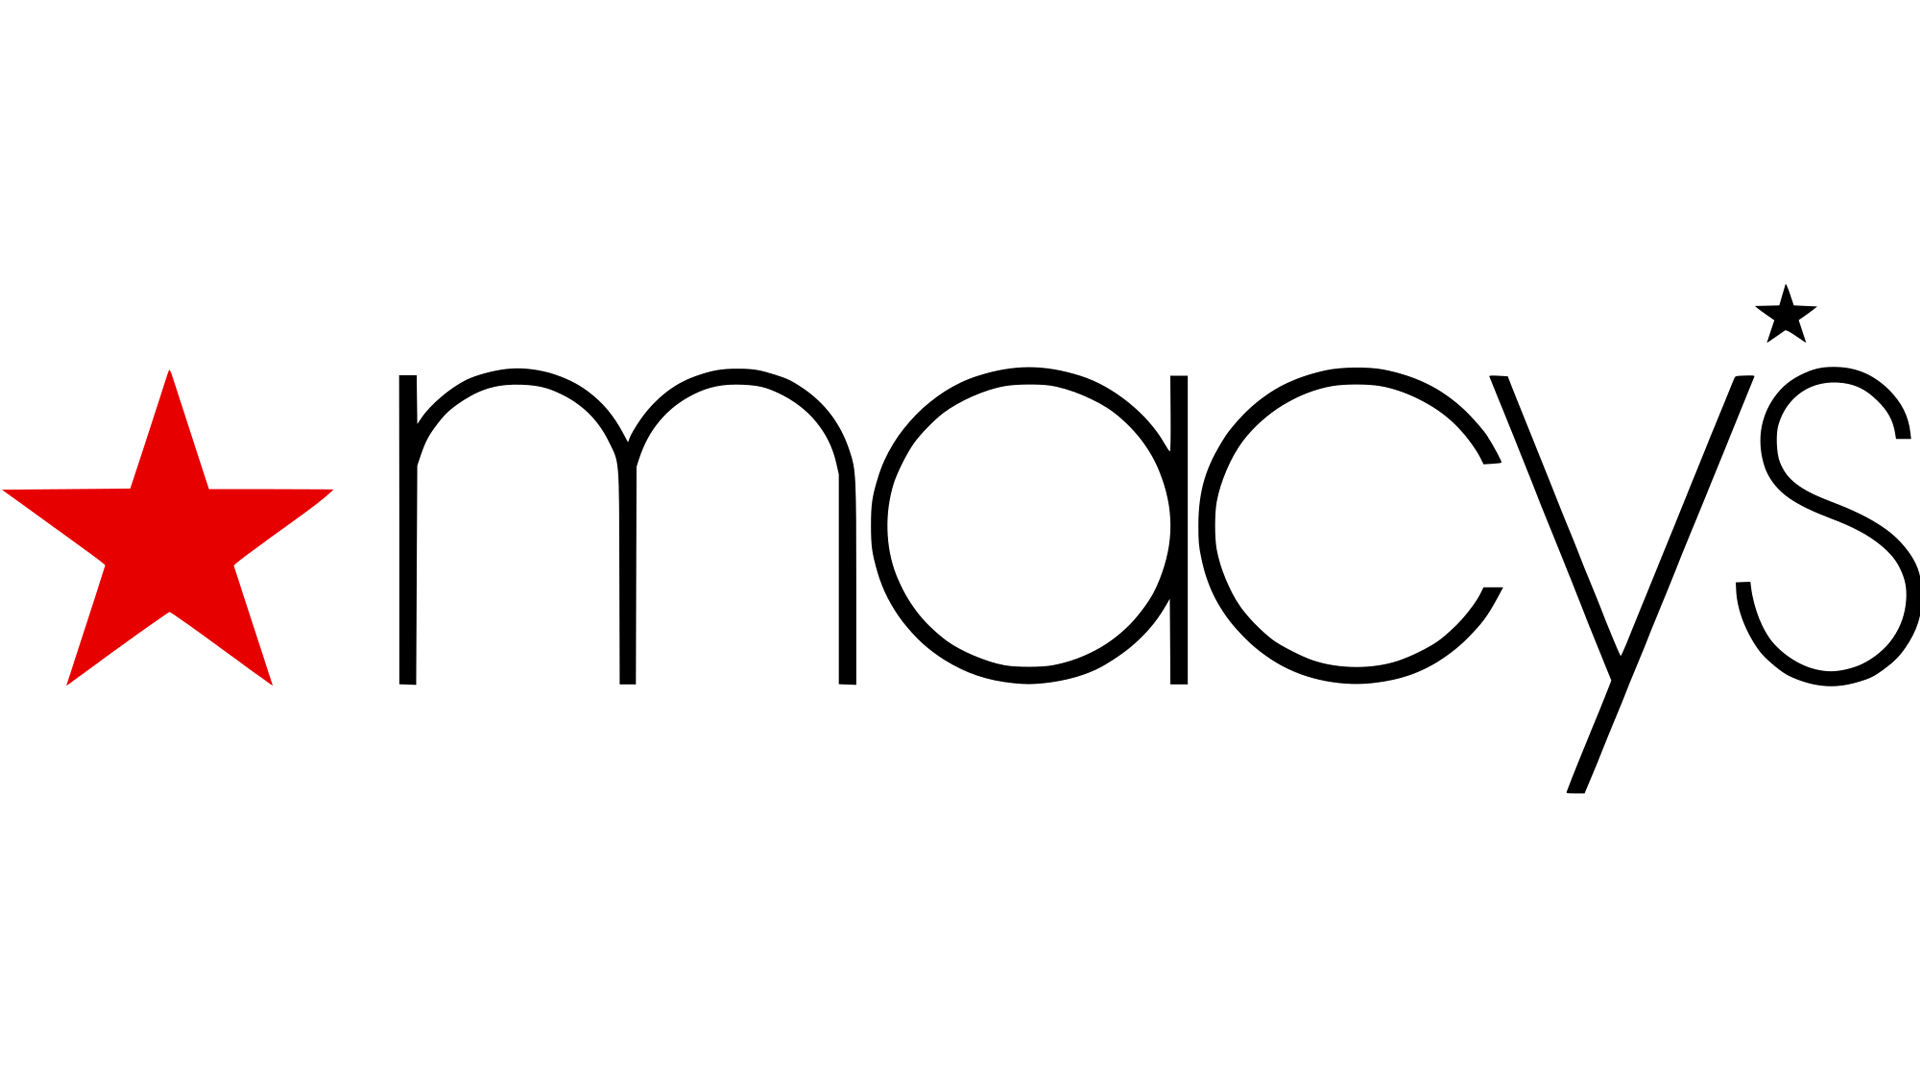 Macy's Star Logo - Macys Logo, Macys Symbol, Meaning, History and Evolution